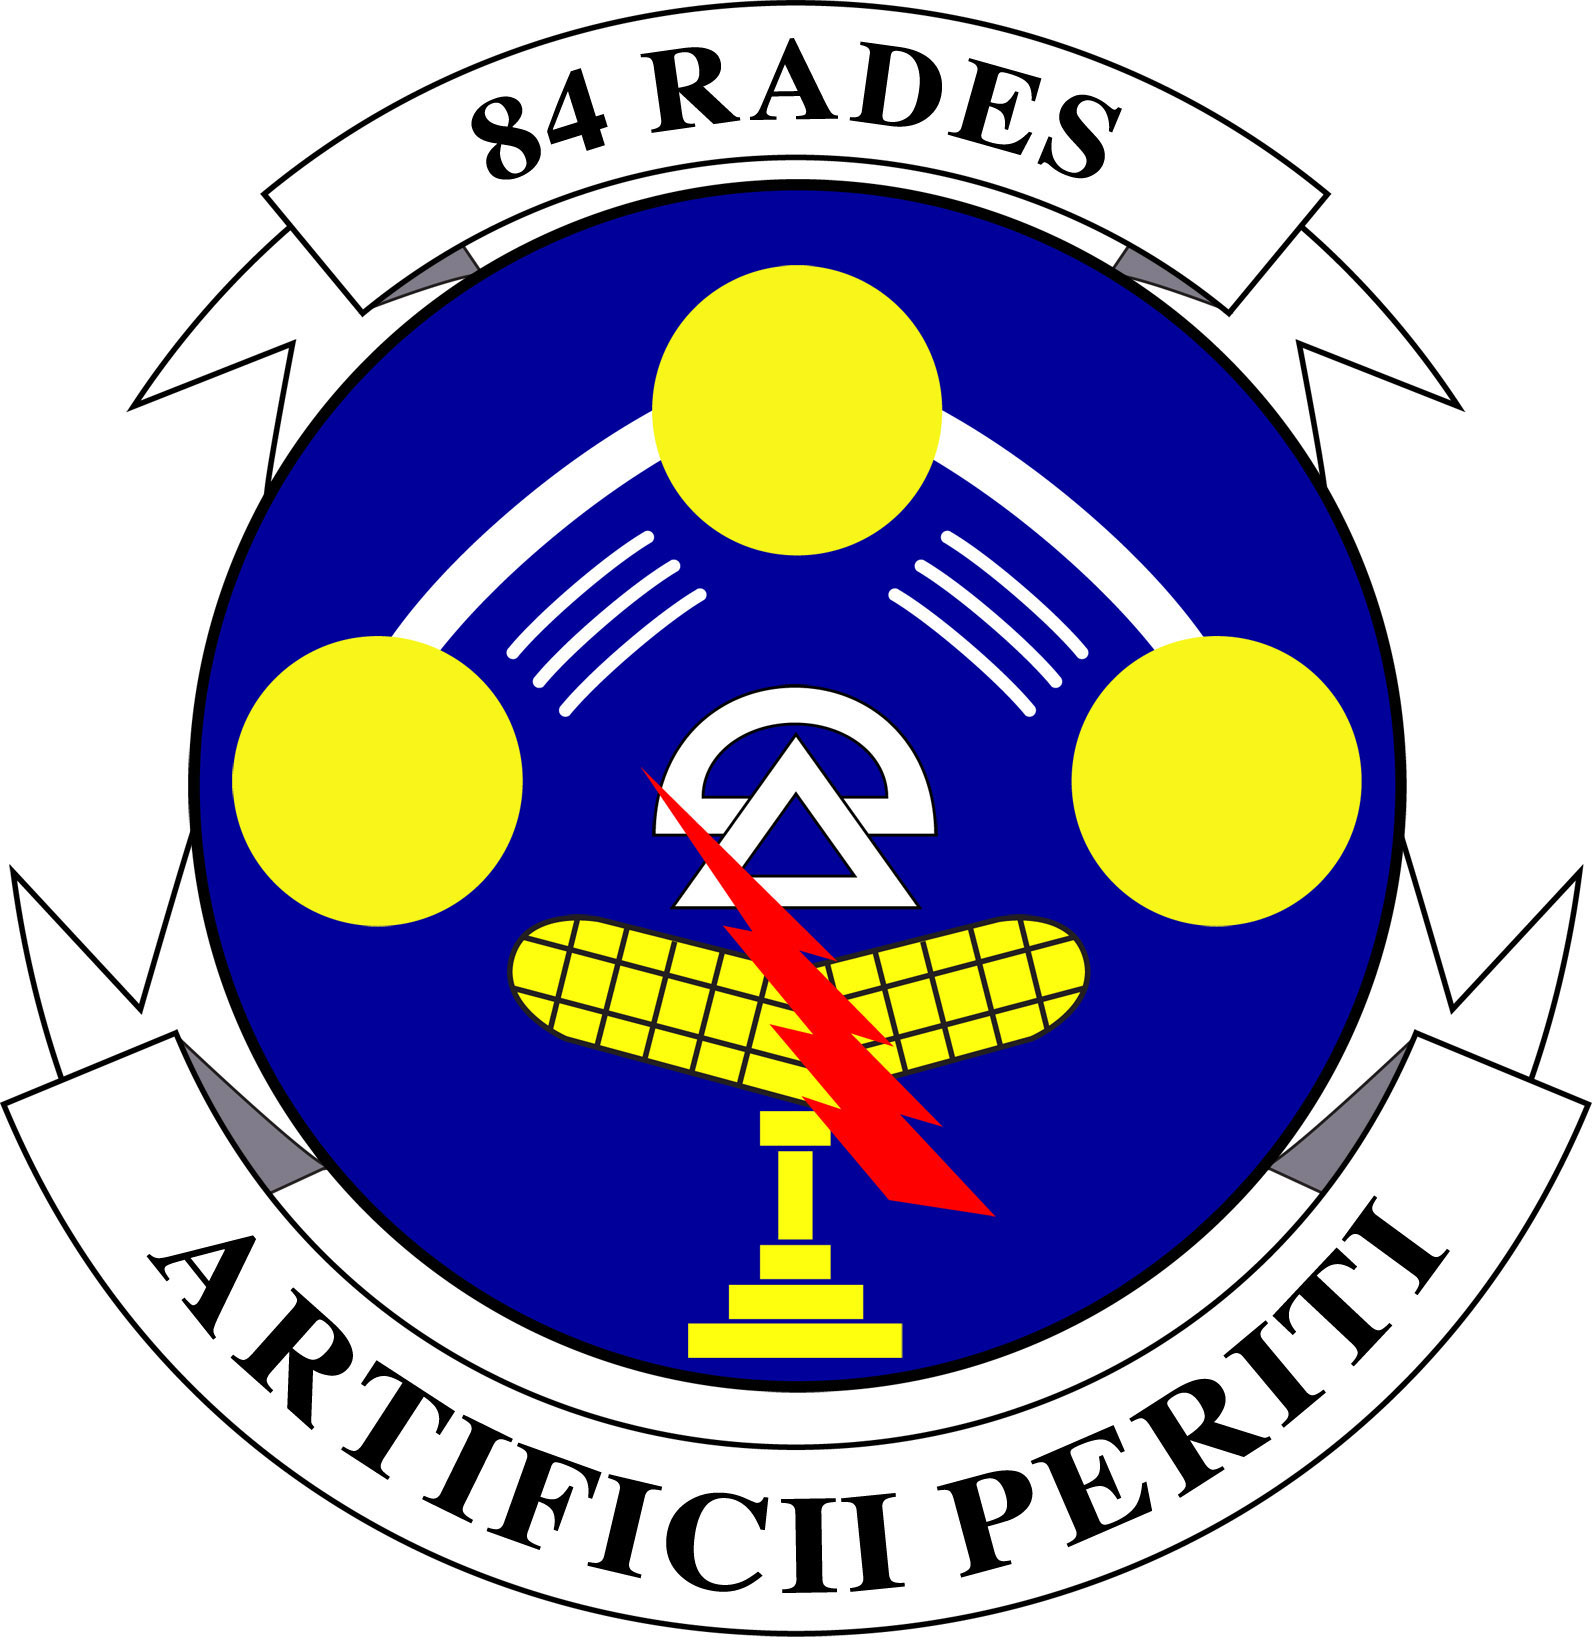 84th RADAR patch